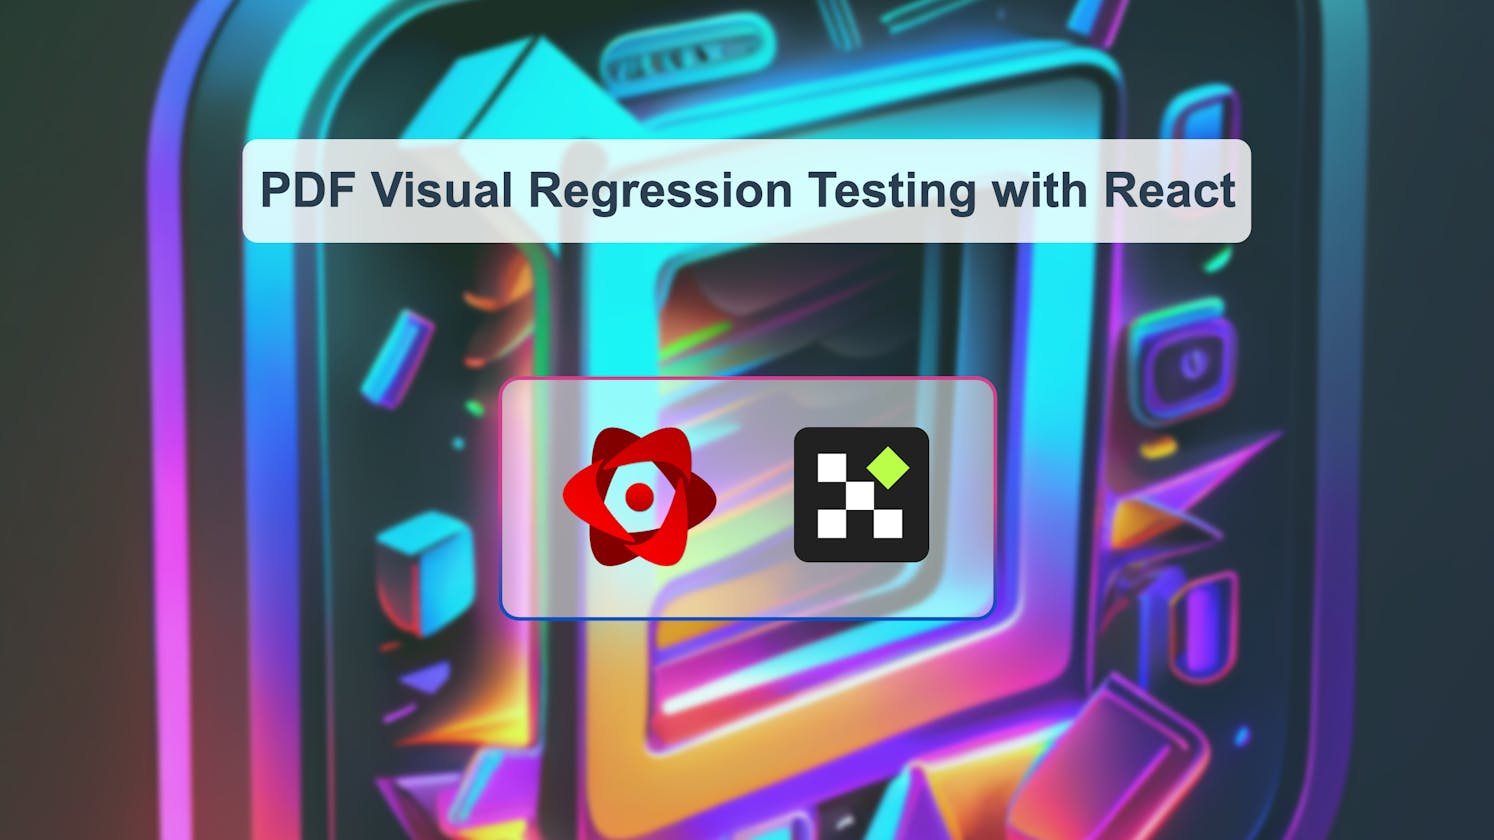 PDF visual regression testing